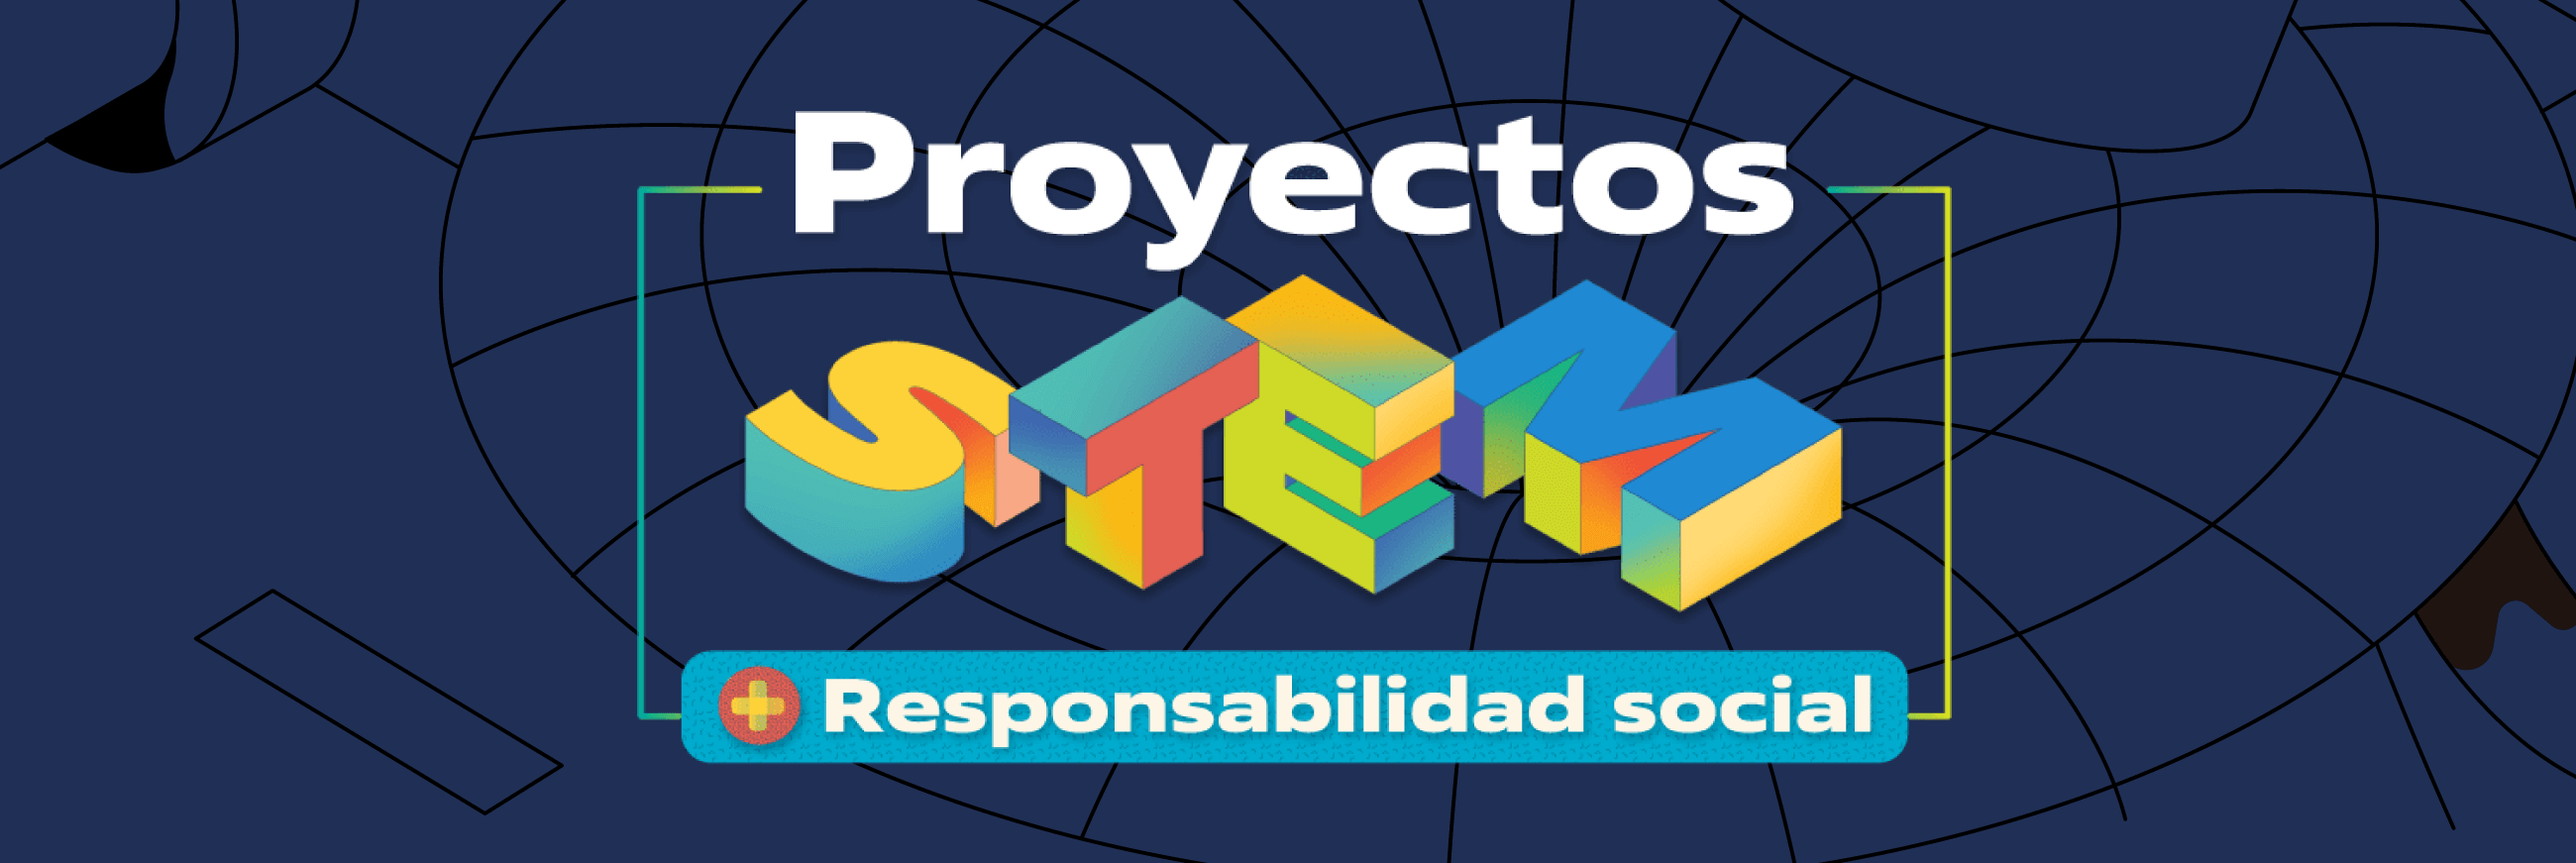 Banner Proyectos STEM + Responsabilidad social